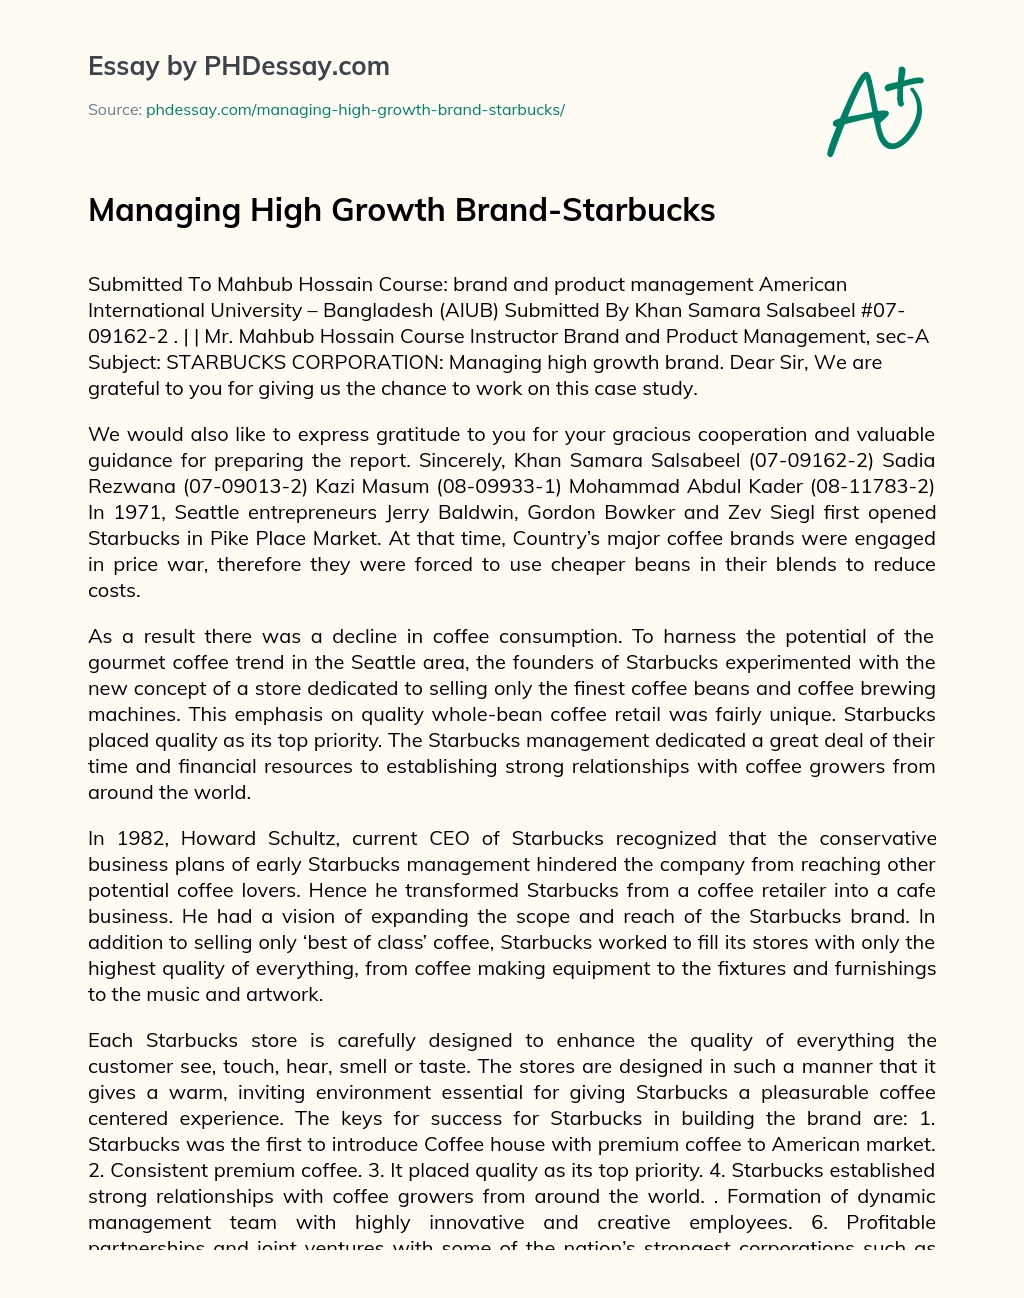 Managing High Growth Brand-Starbucks essay